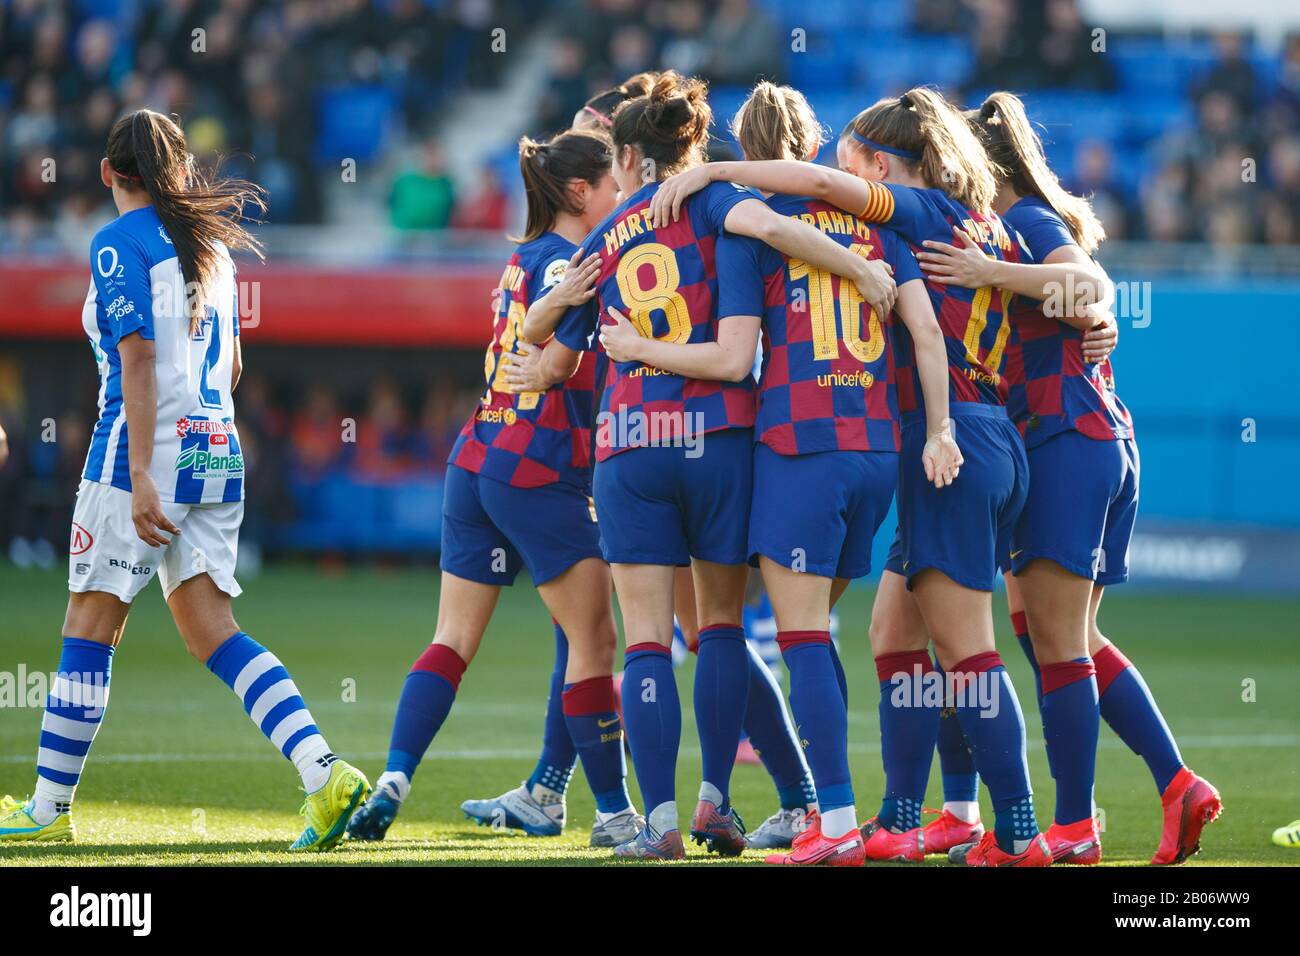 Real madrid huelva vs sporting Women's Spanish